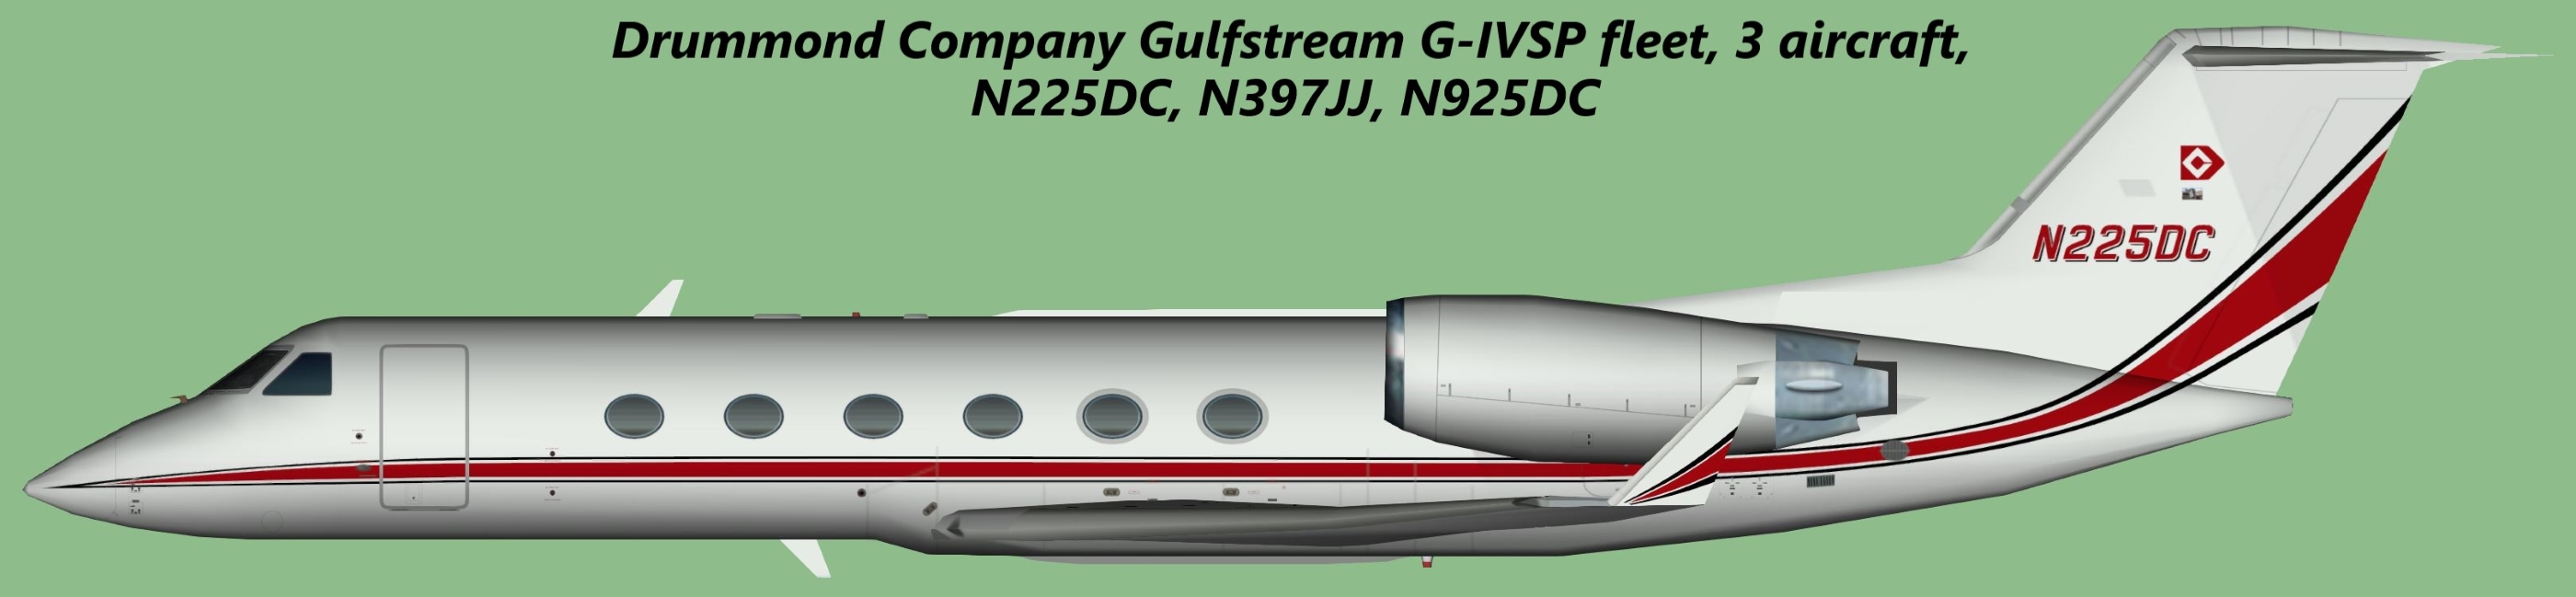 Drummond Company Gulfstream G-IVSP fleet, 3 aircraft